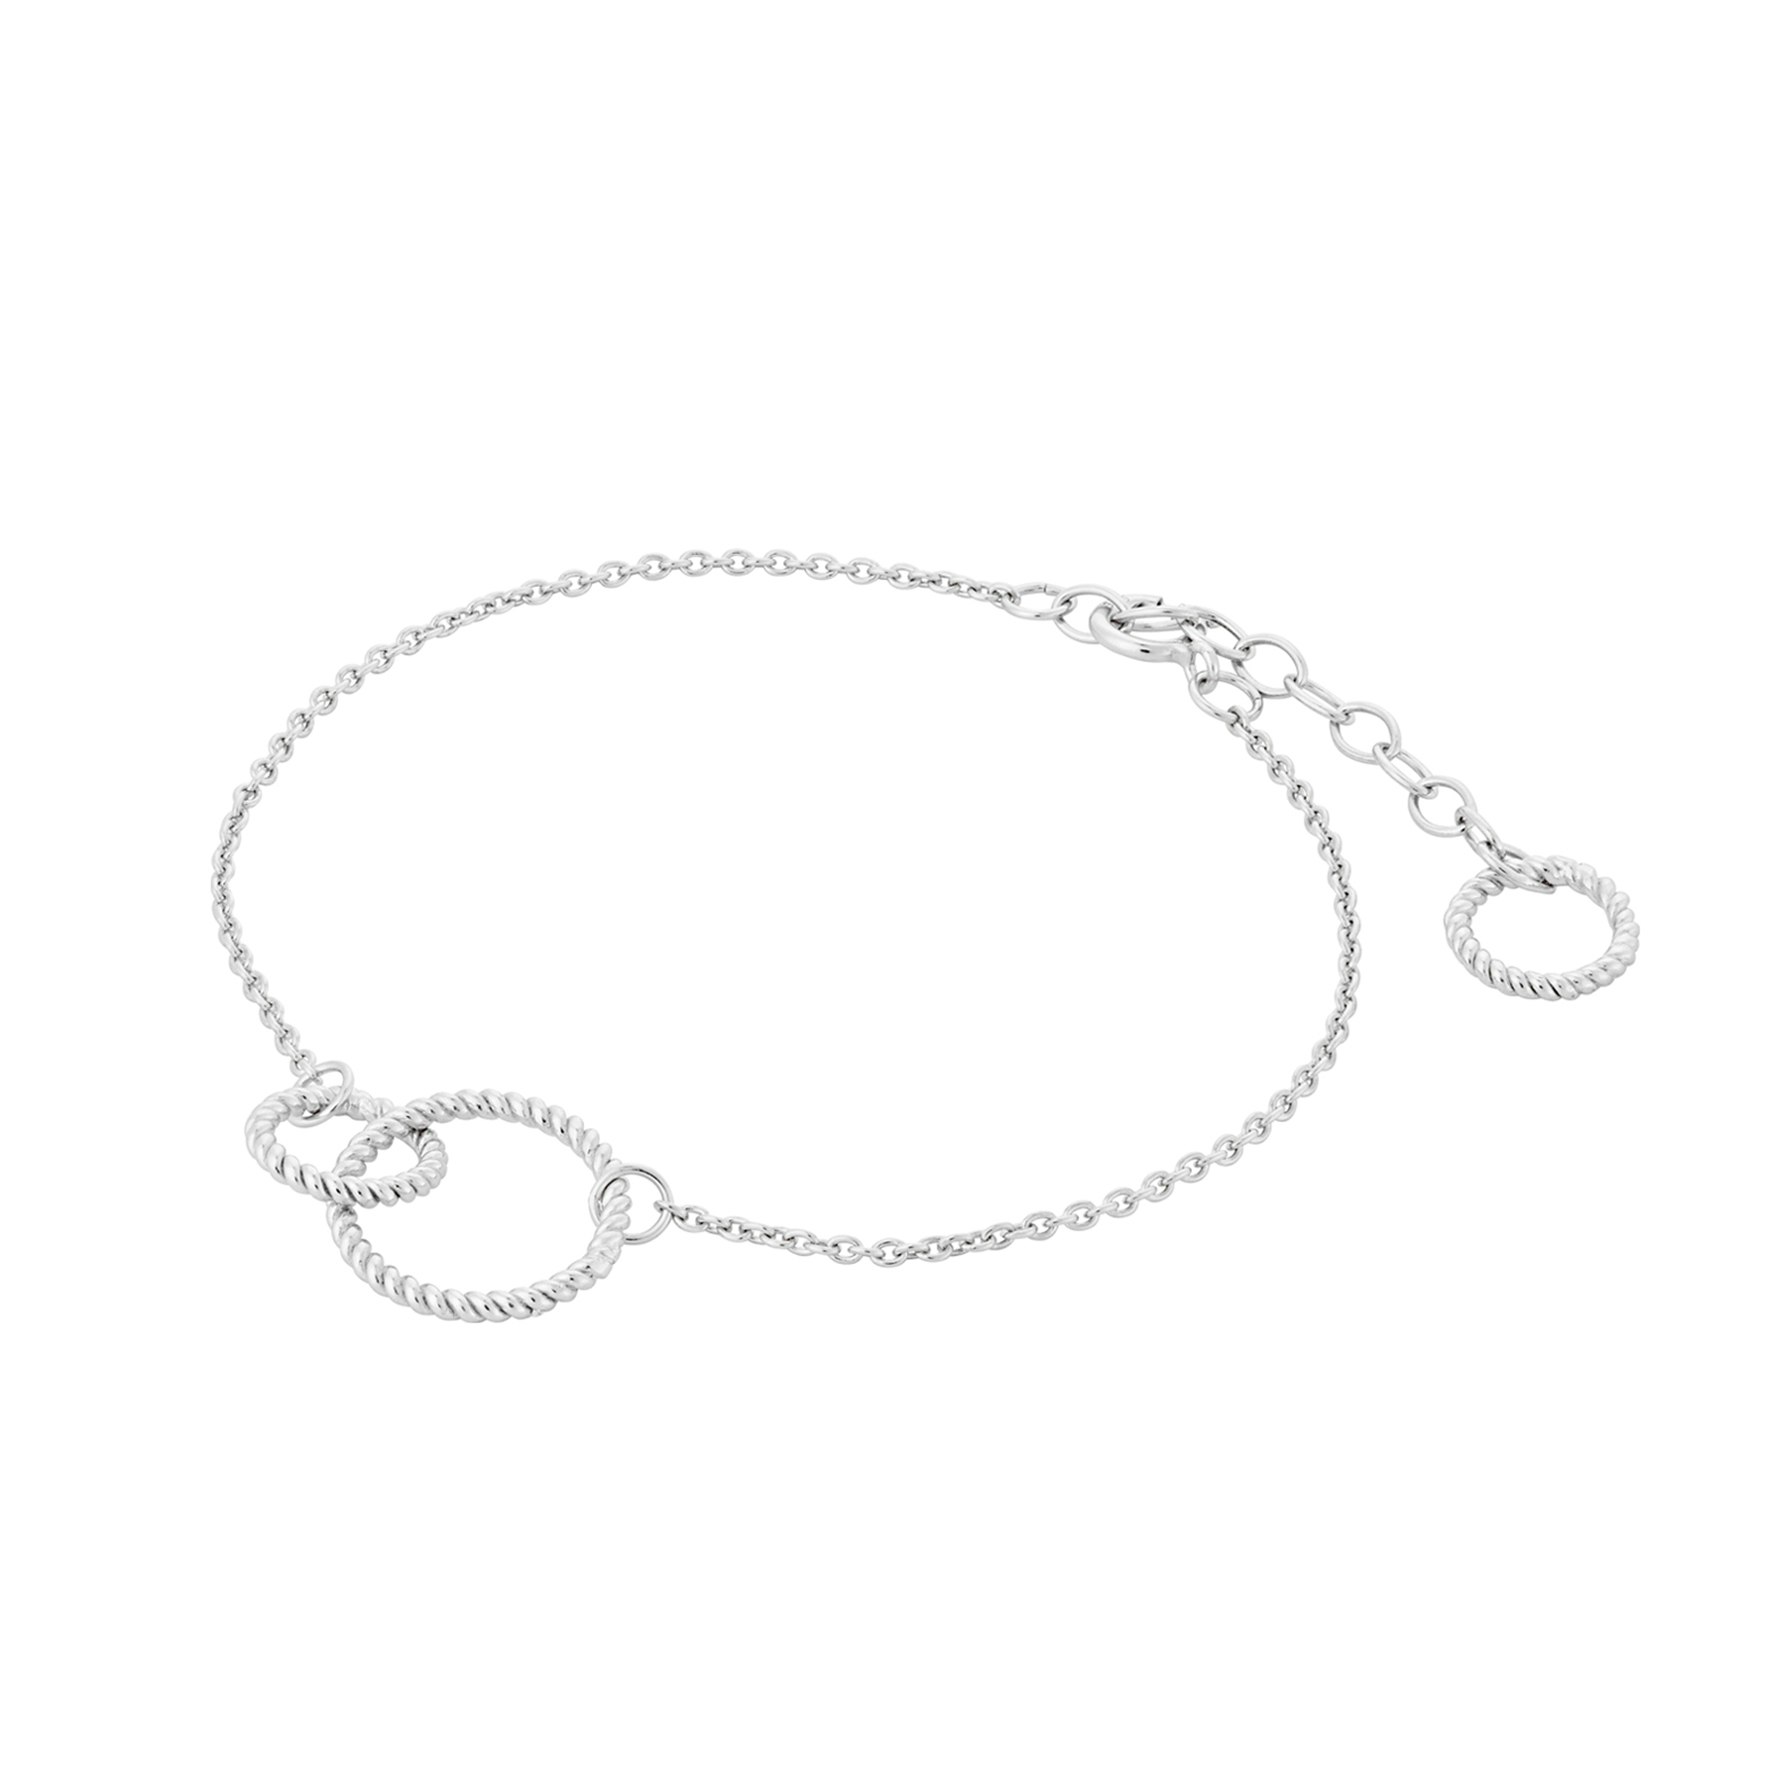 Double Twisted Bracelet von Pernille Corydon in Silber Sterling 925